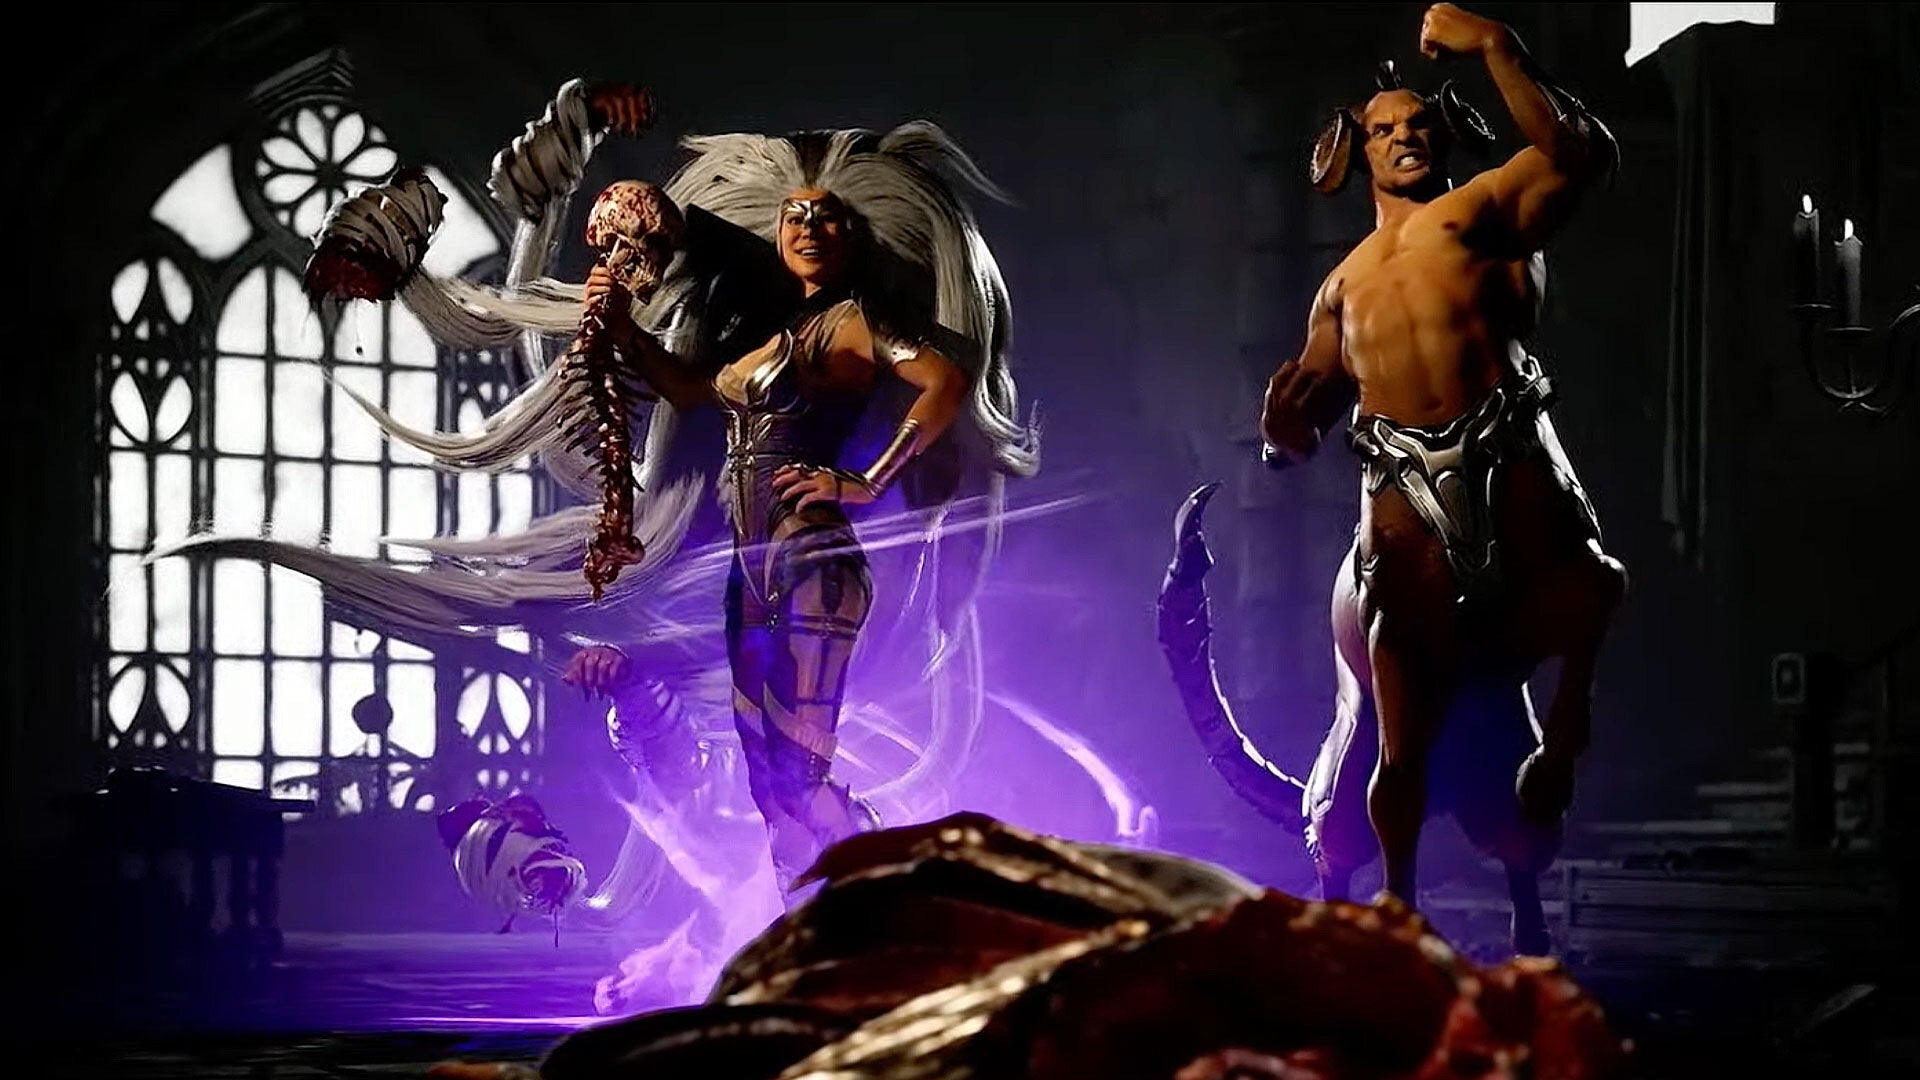 Mortal Kombat 11 (Switch): novo trailer revela o gameplay de Shang Tsung -  Nintendo Blast